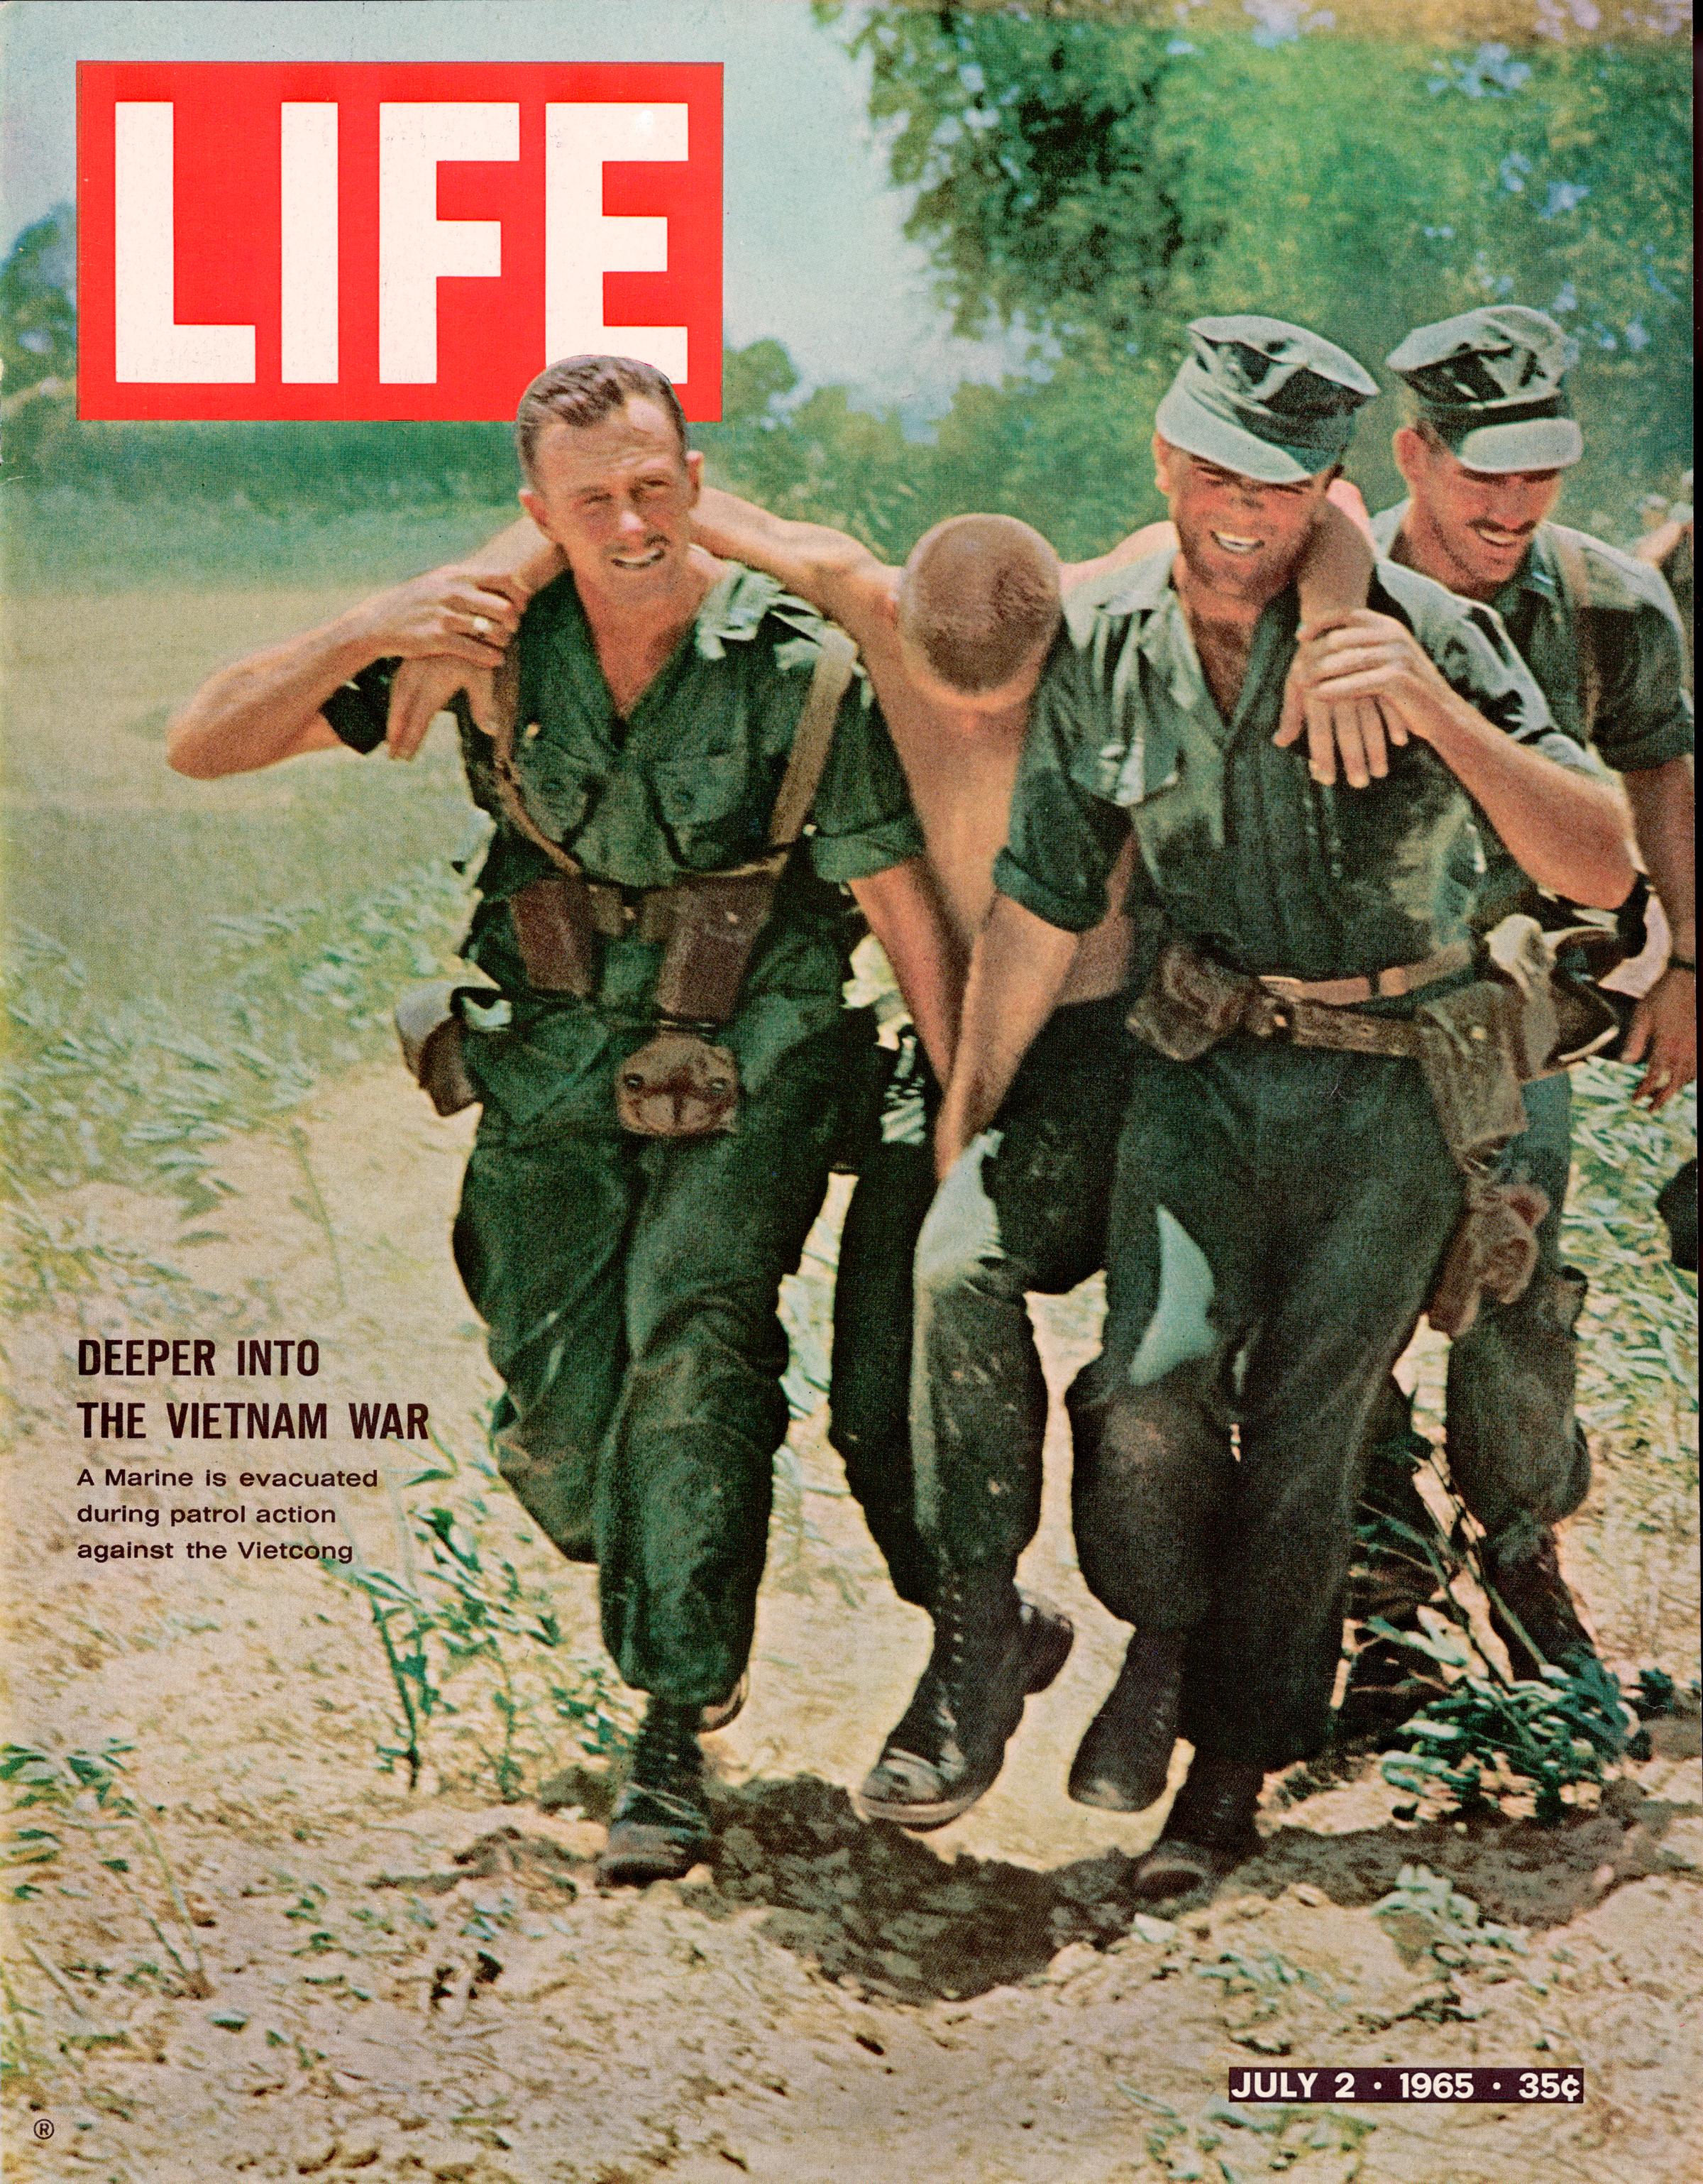 LIFE, July 2, 1965